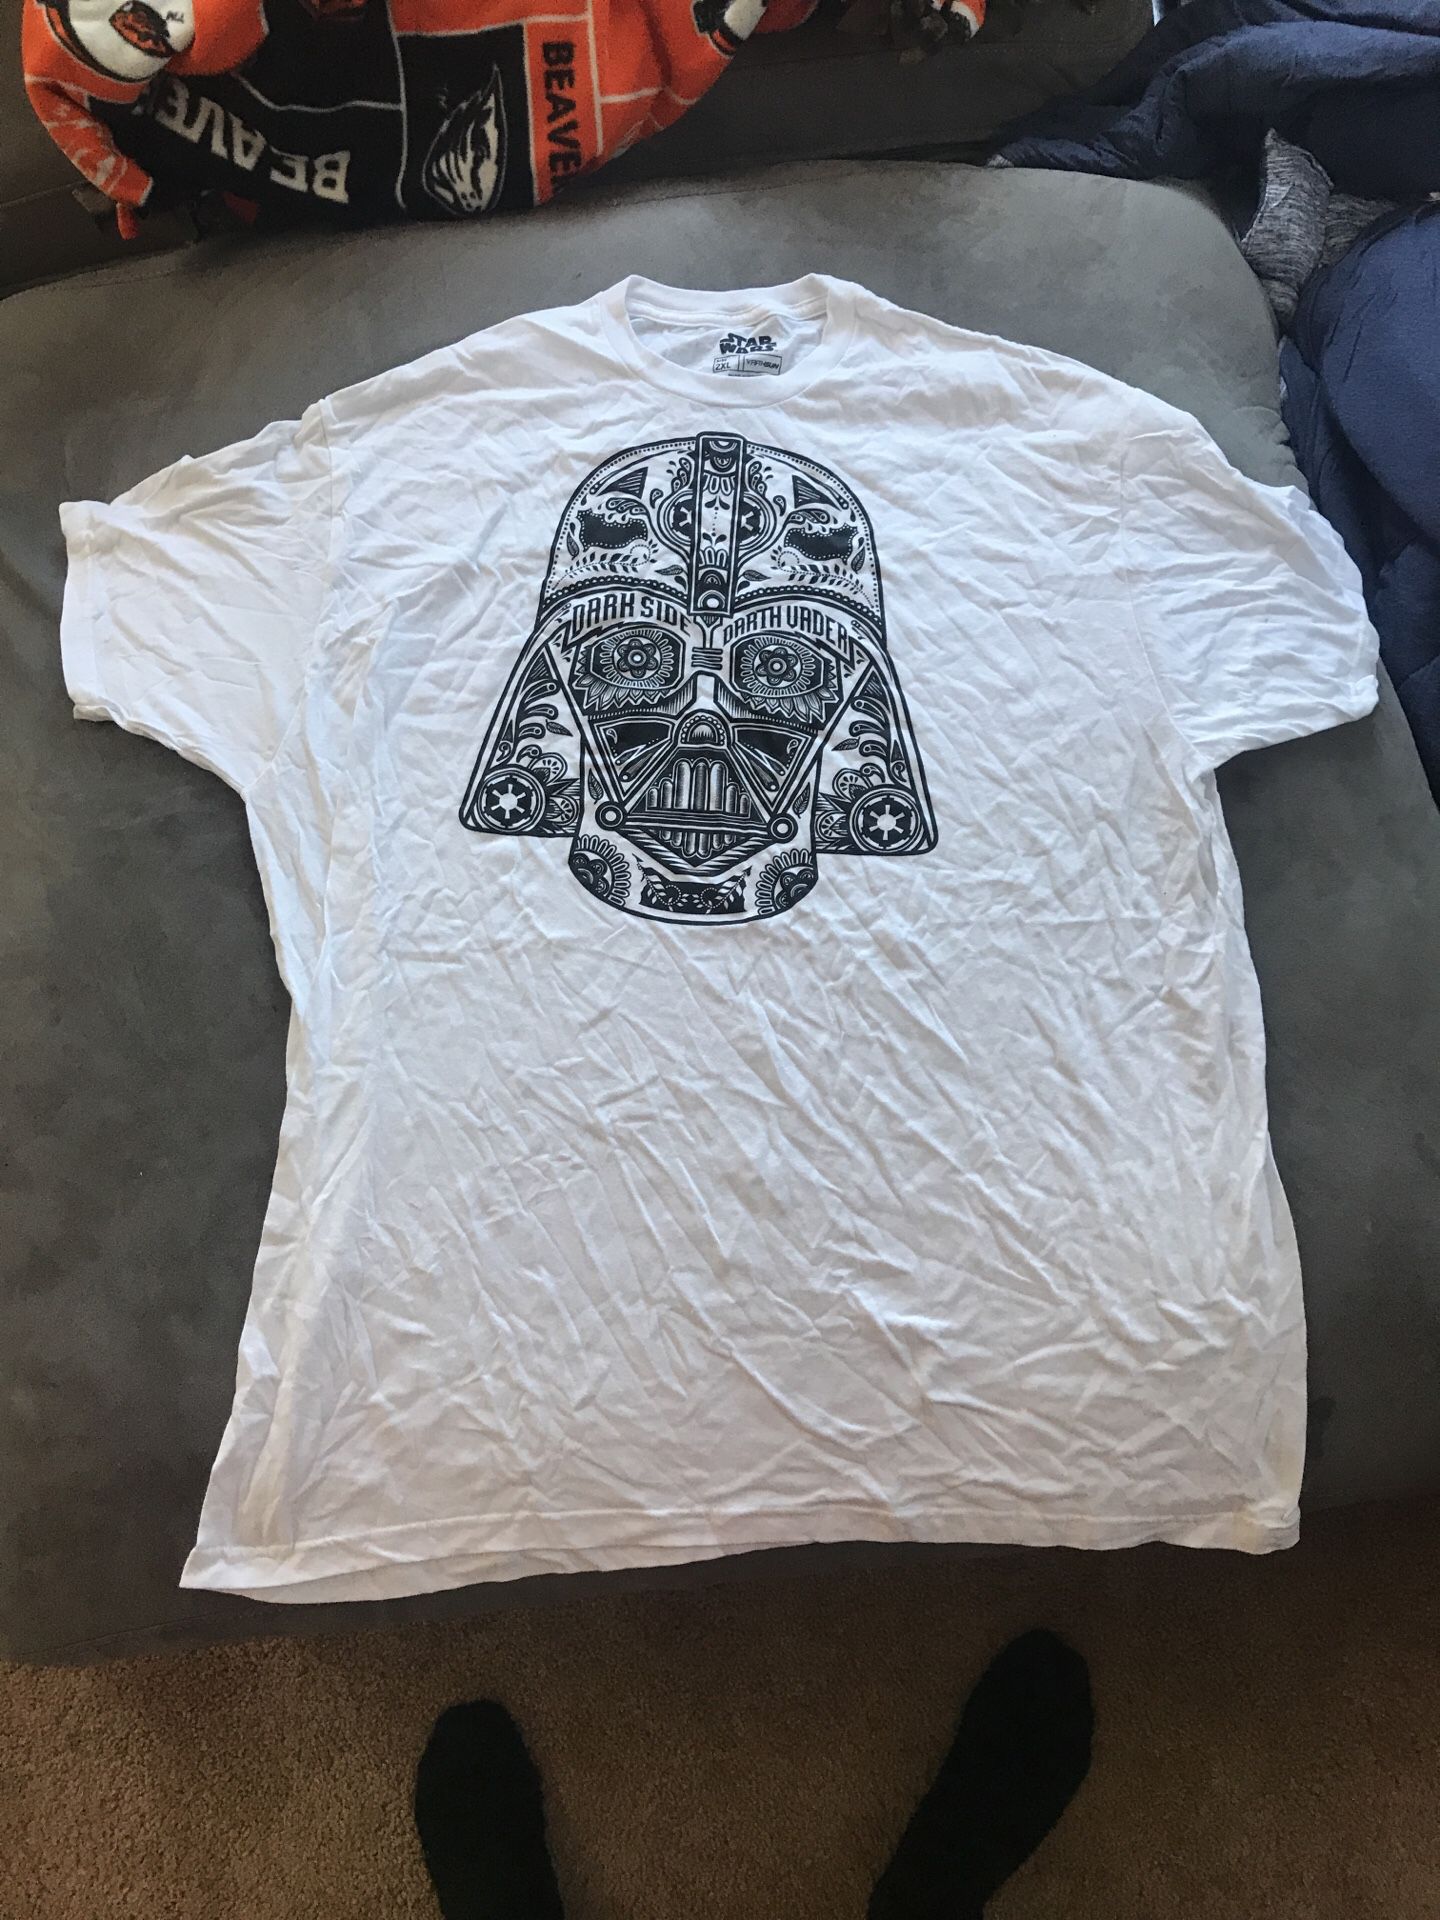 Darth vader Star Wars ‘ darth side’ graphic shirt